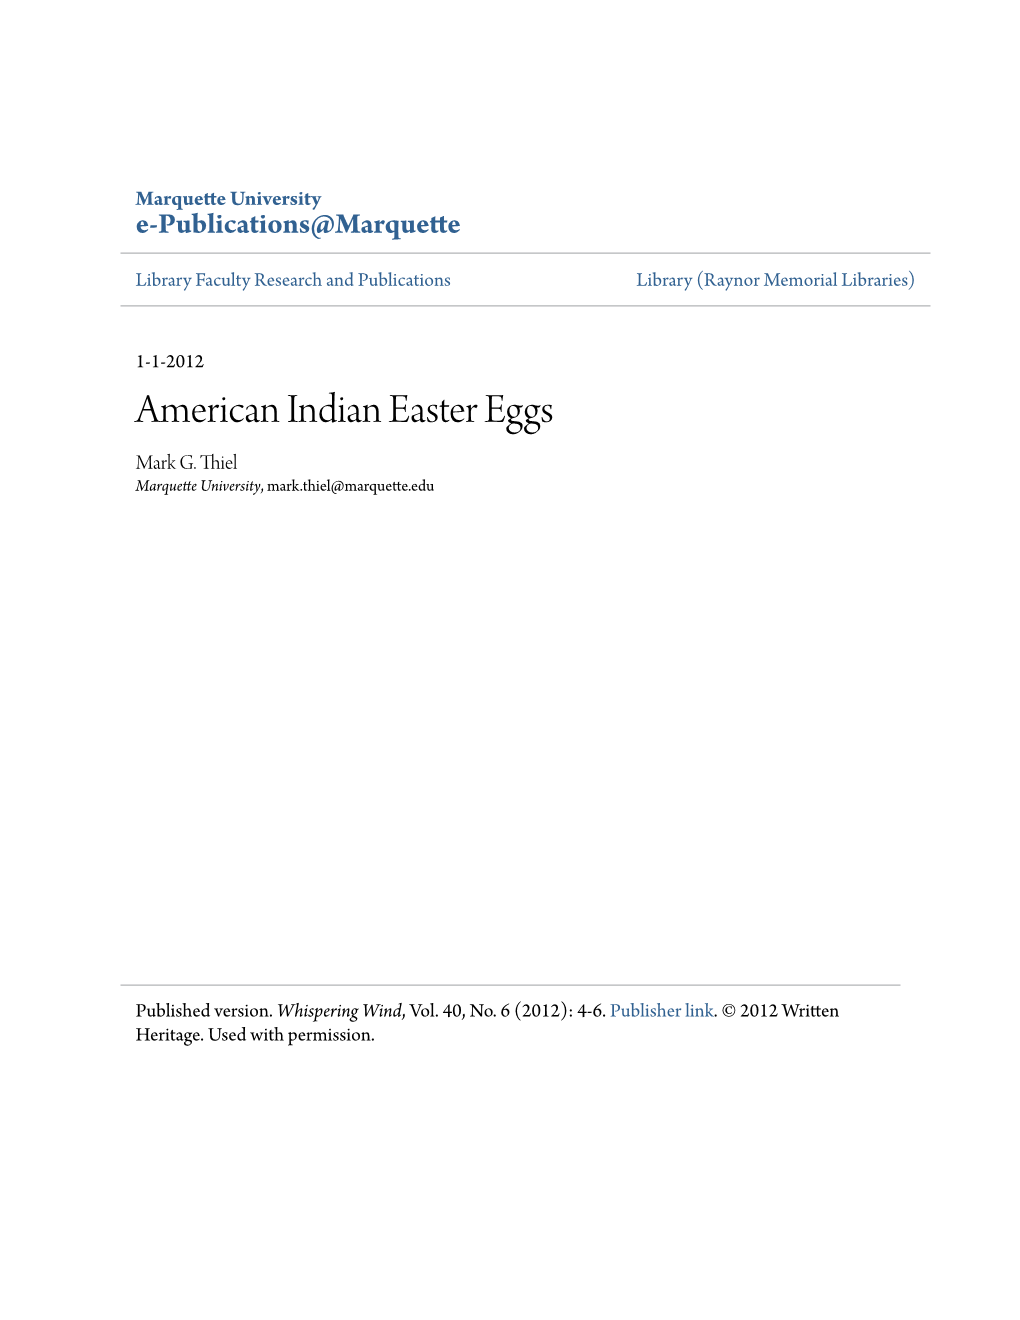 American Indian Easter Eggs Mark G